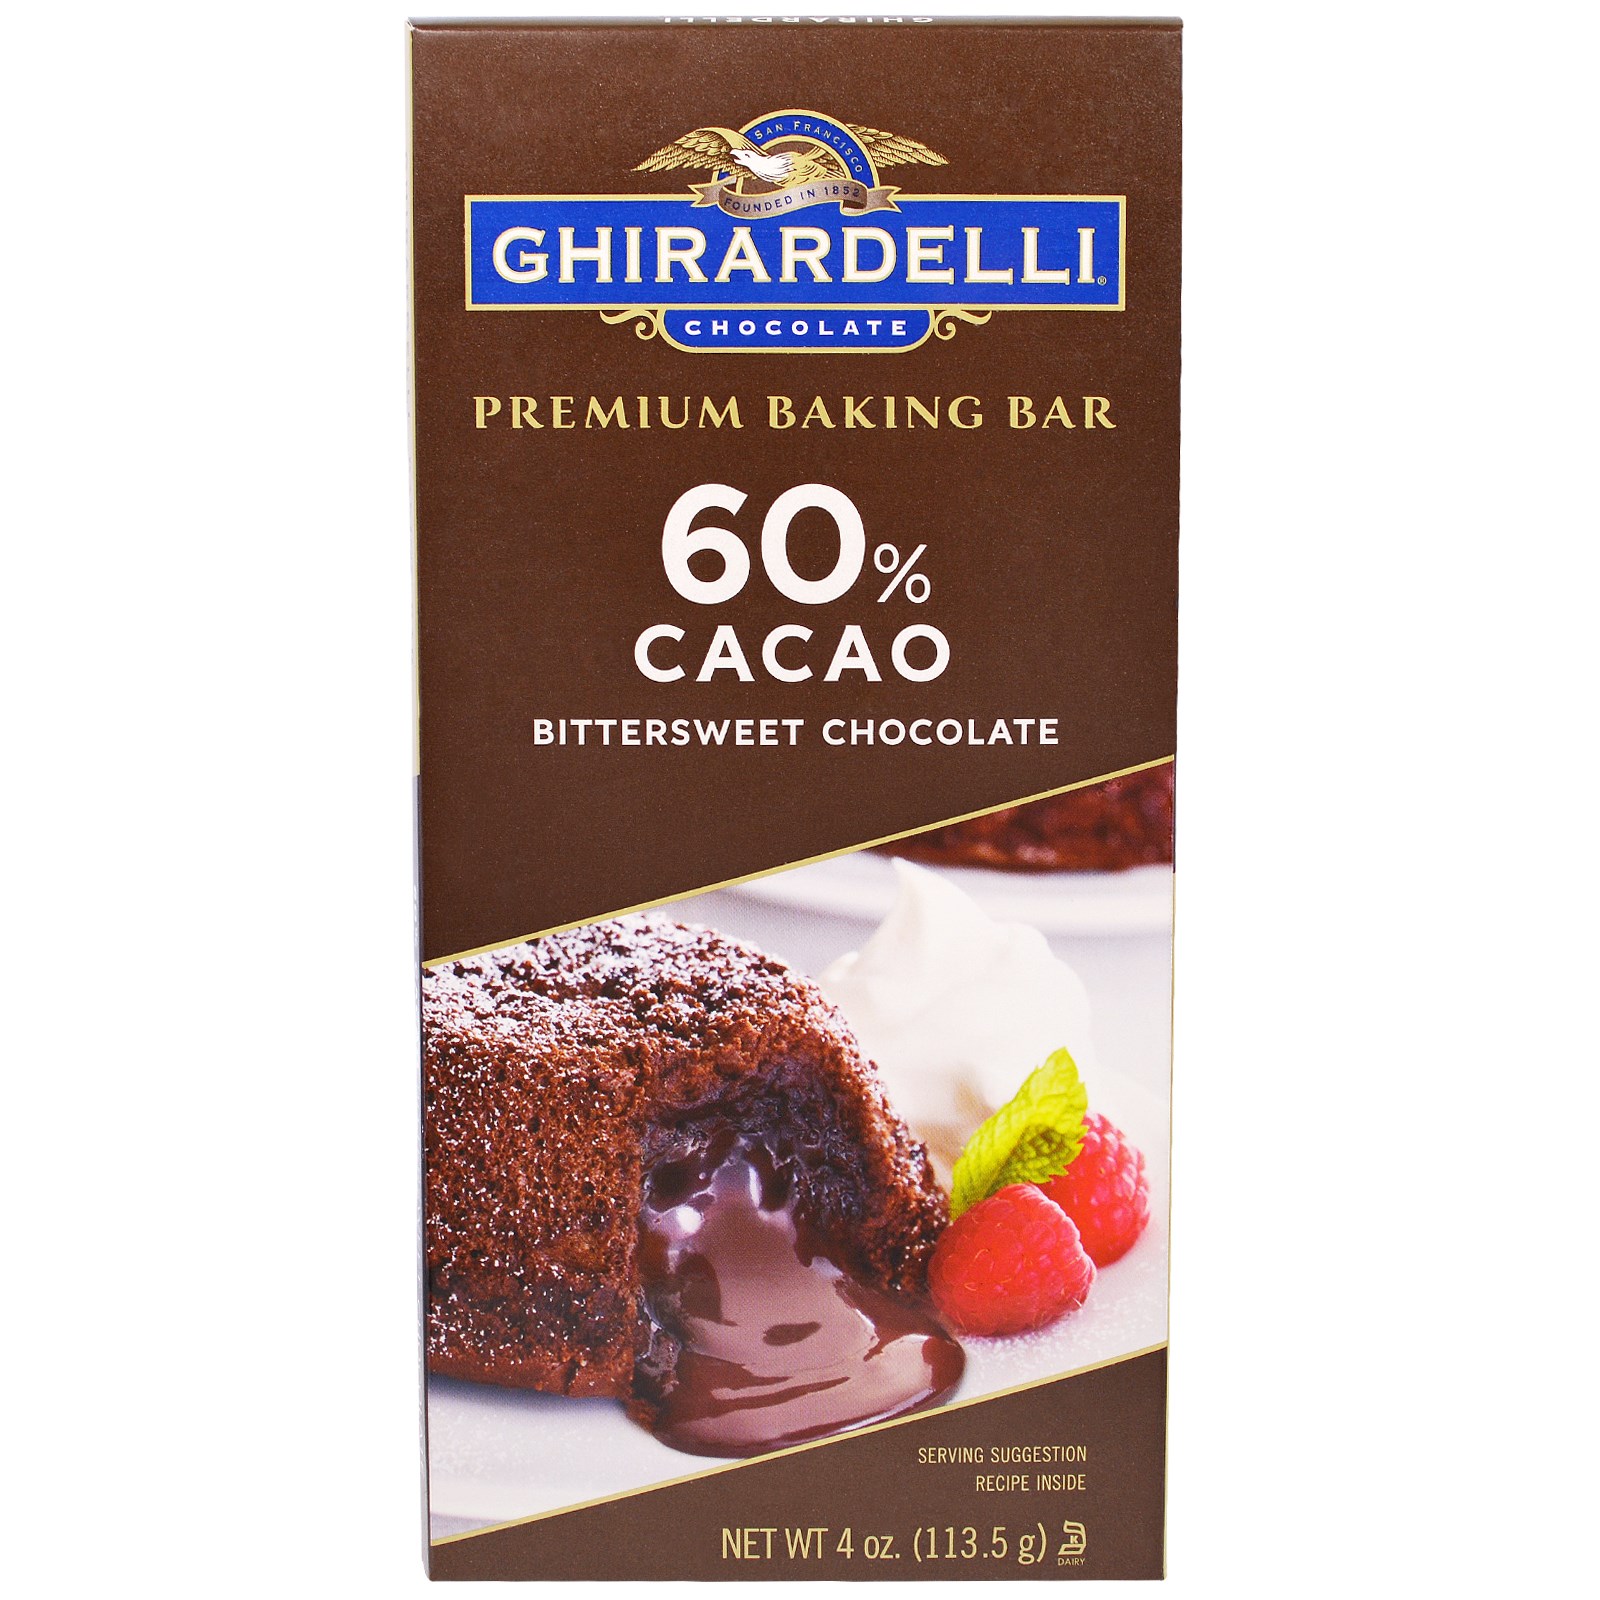 Ghirardelli プレミアムベーキングバー 60 カカオビタースイートチョコレート 4オンス 113 5 G Iherb